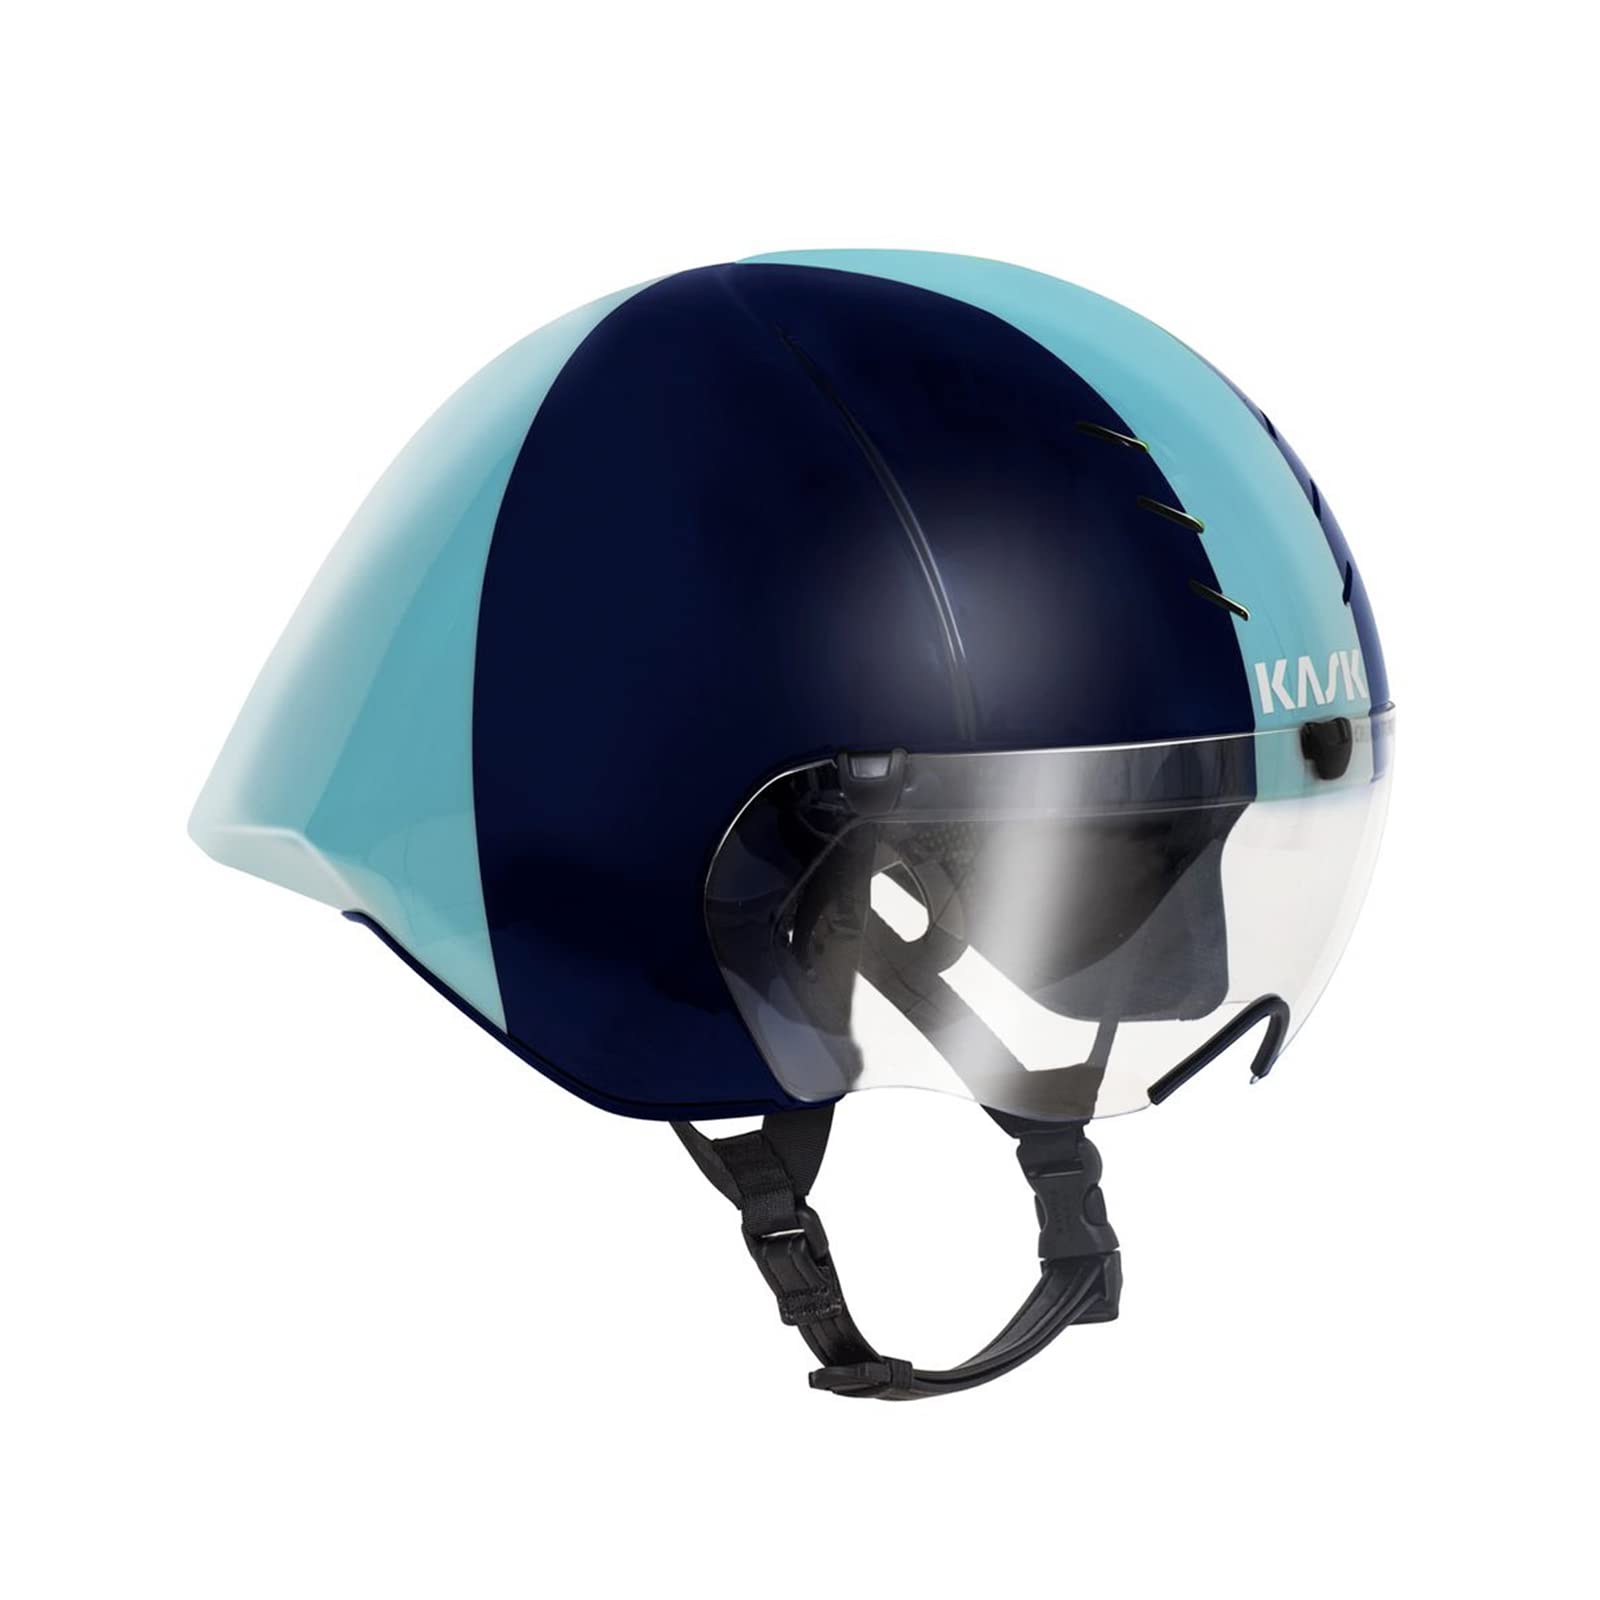 KASK Mistral Bike Helmet I Aerodynamic Track Cycling Crono Triathlon Helmet - BlueLight Blue - Medium